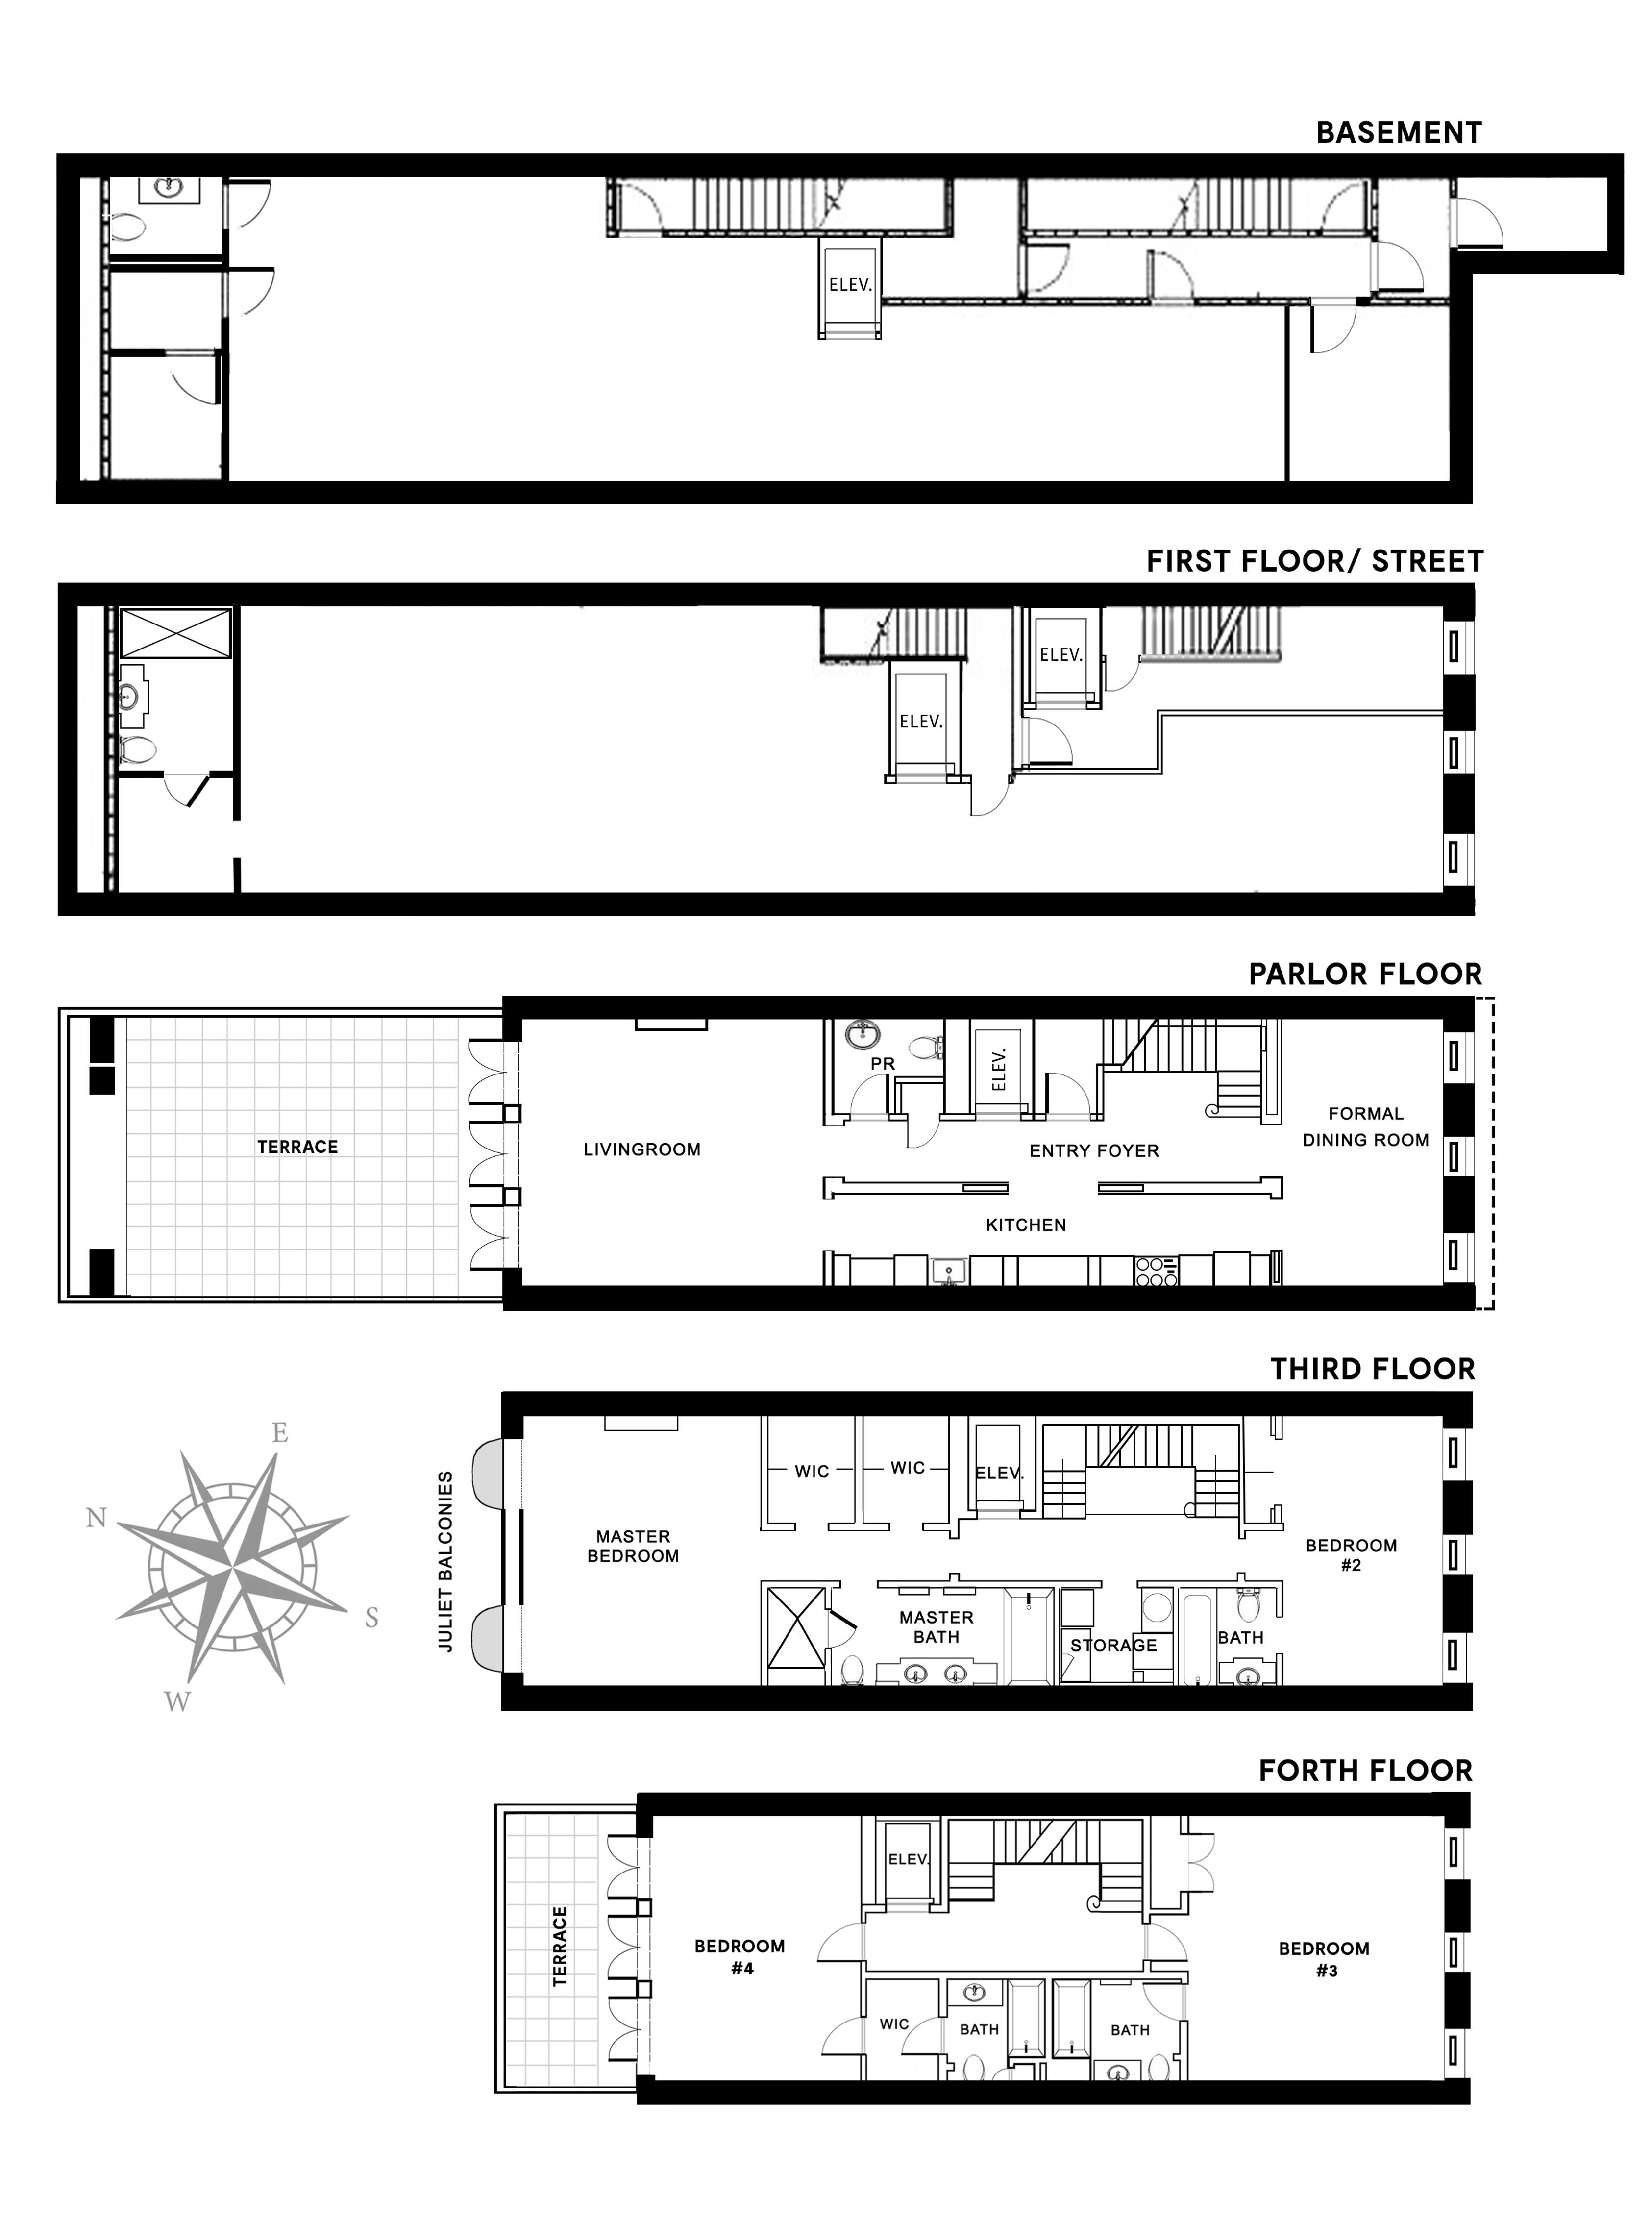 Floorplan for 205 East 61st Street, THOUSE